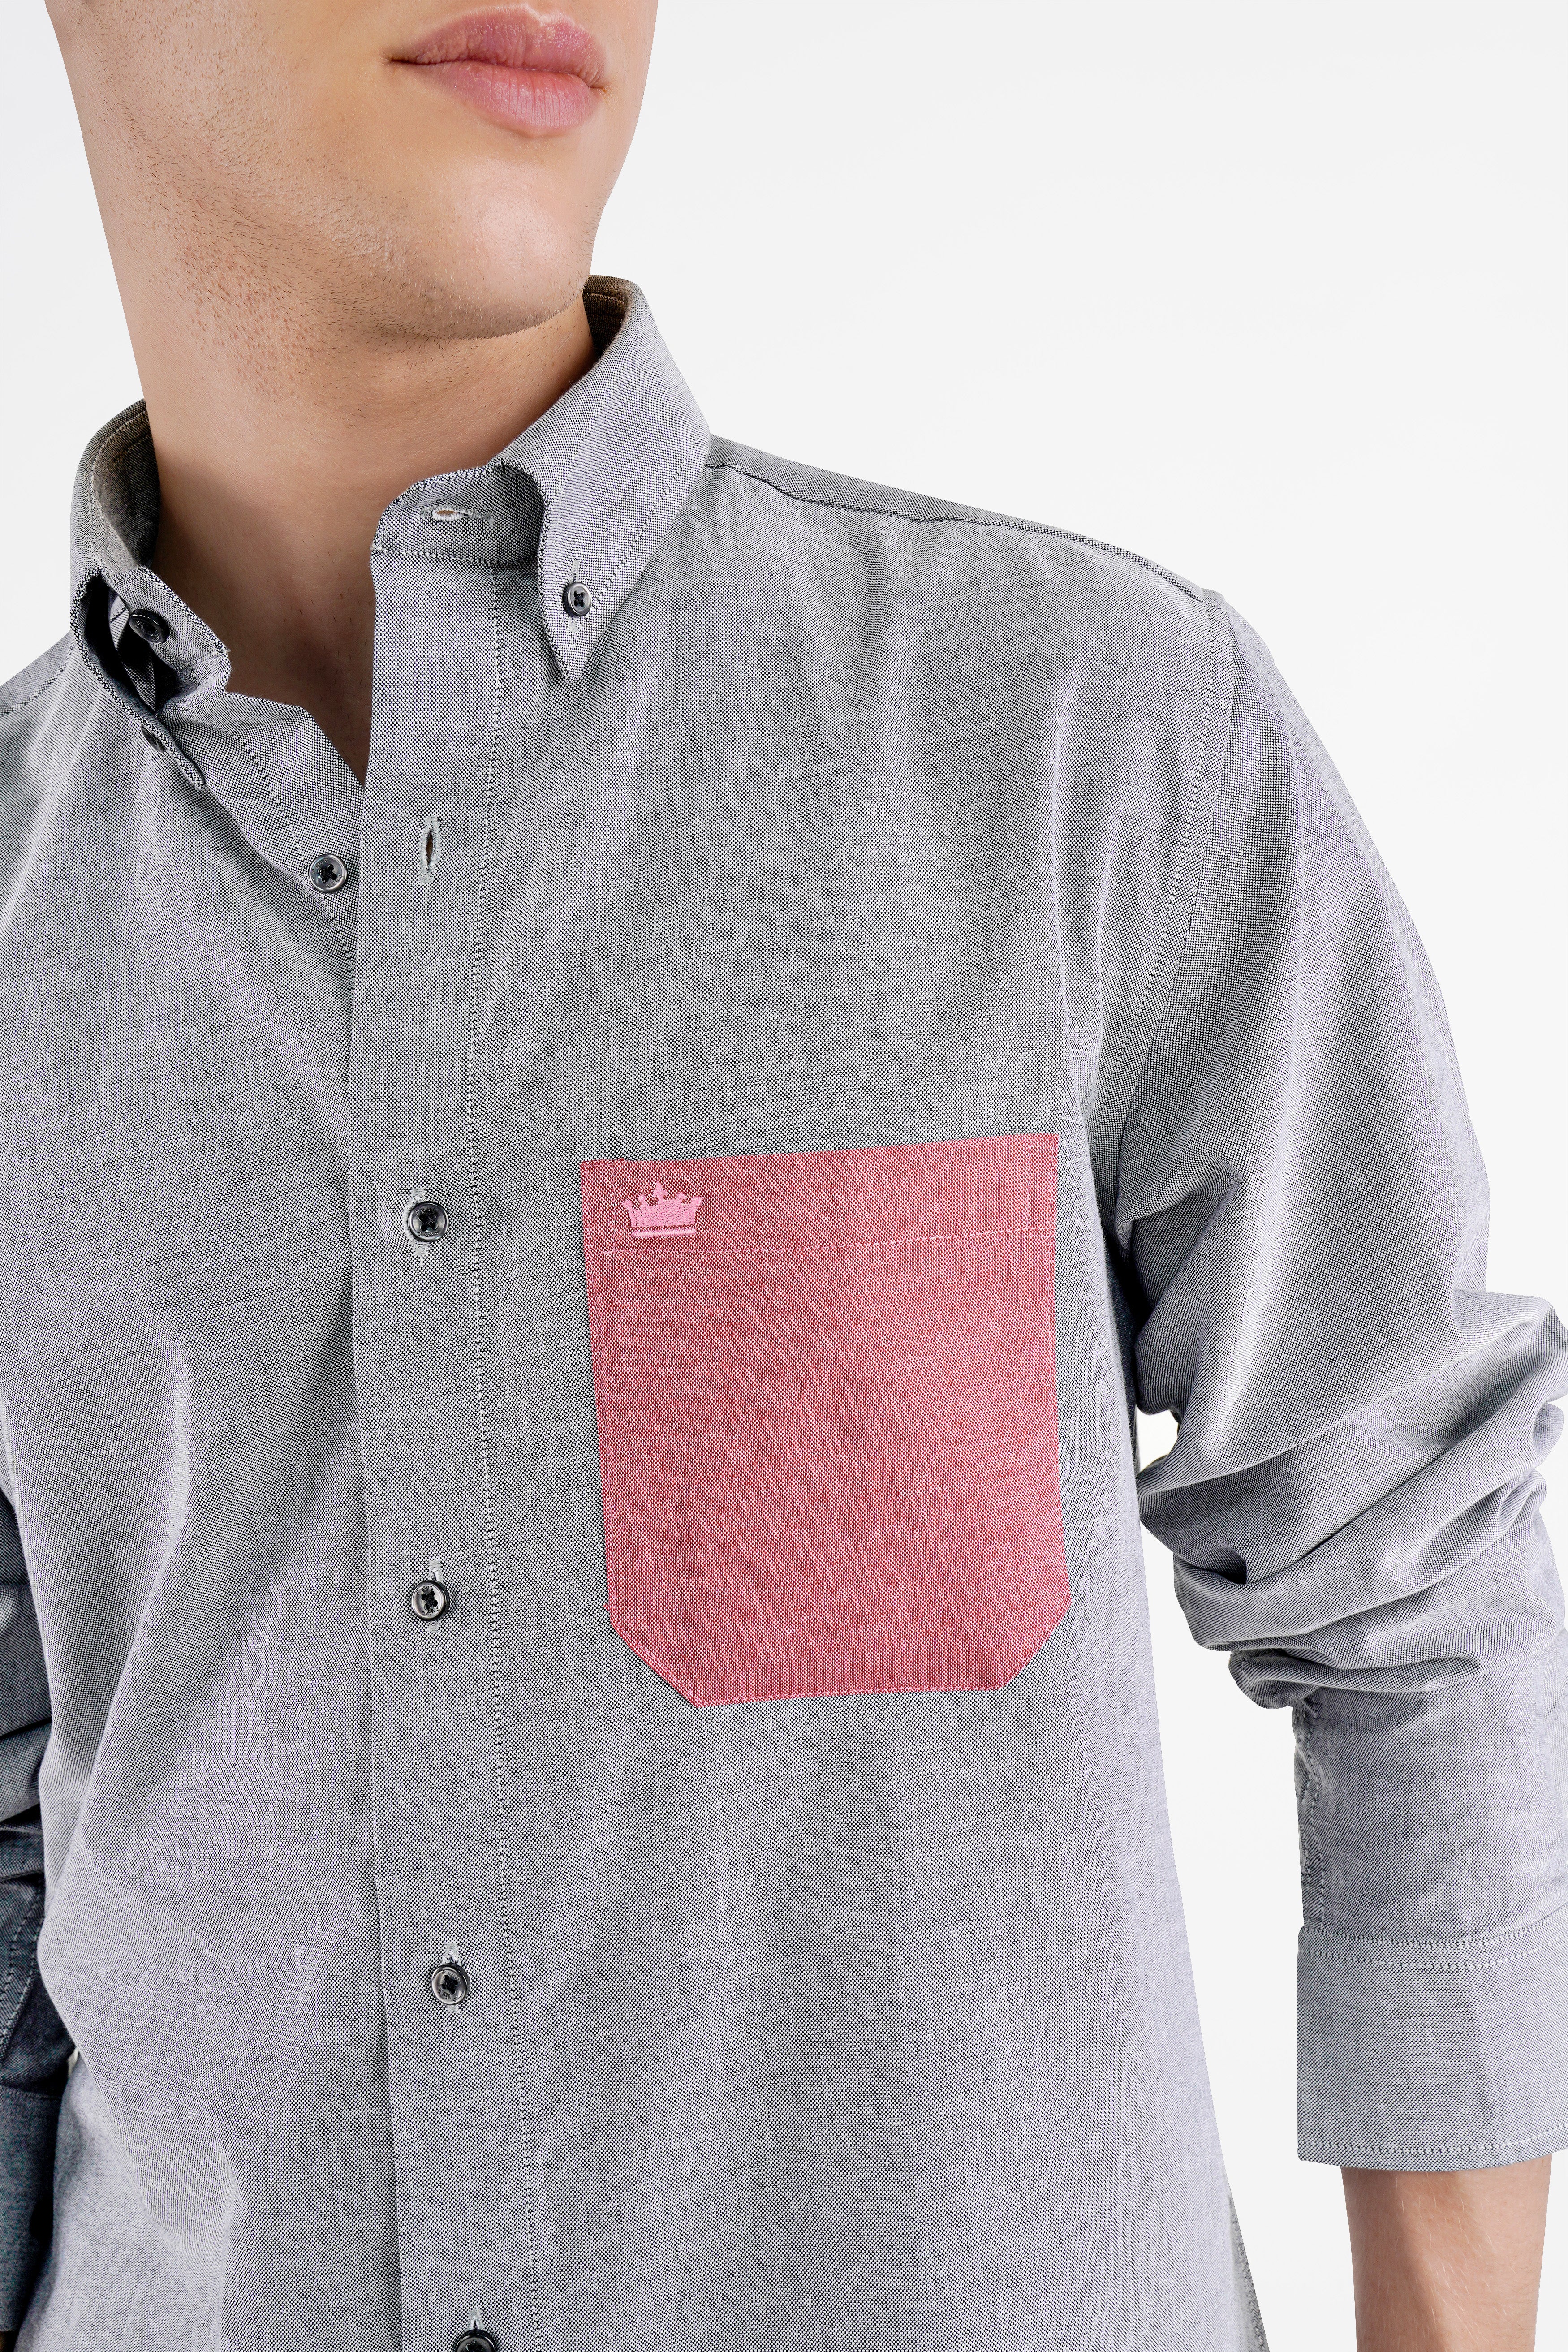 Pumice Gray with Pink Pocket Royal Oxford Shirt